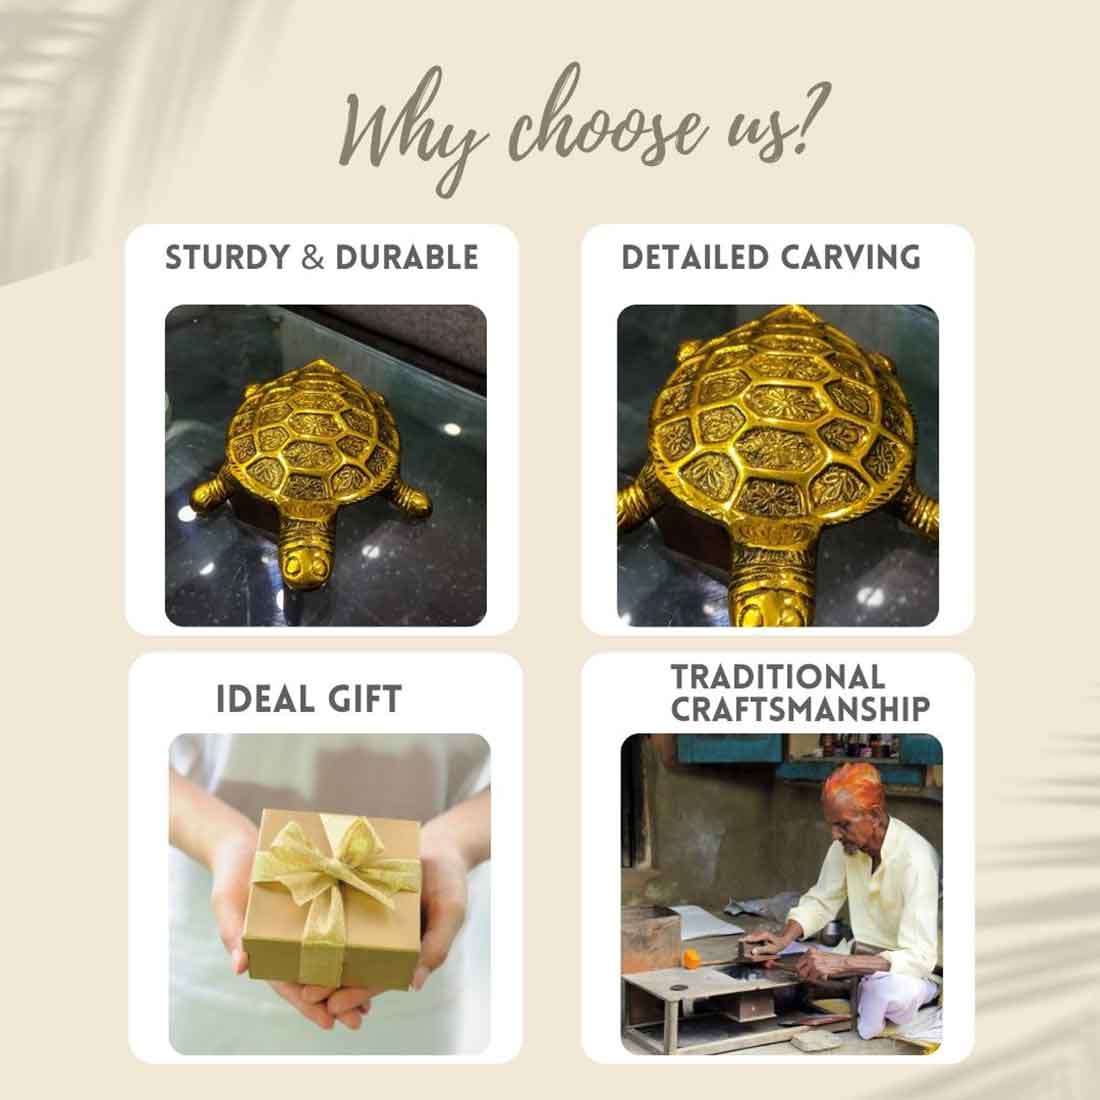 Tortoise Showpiece - For Home Decor & Gifts - 6 inch - ApkaMart